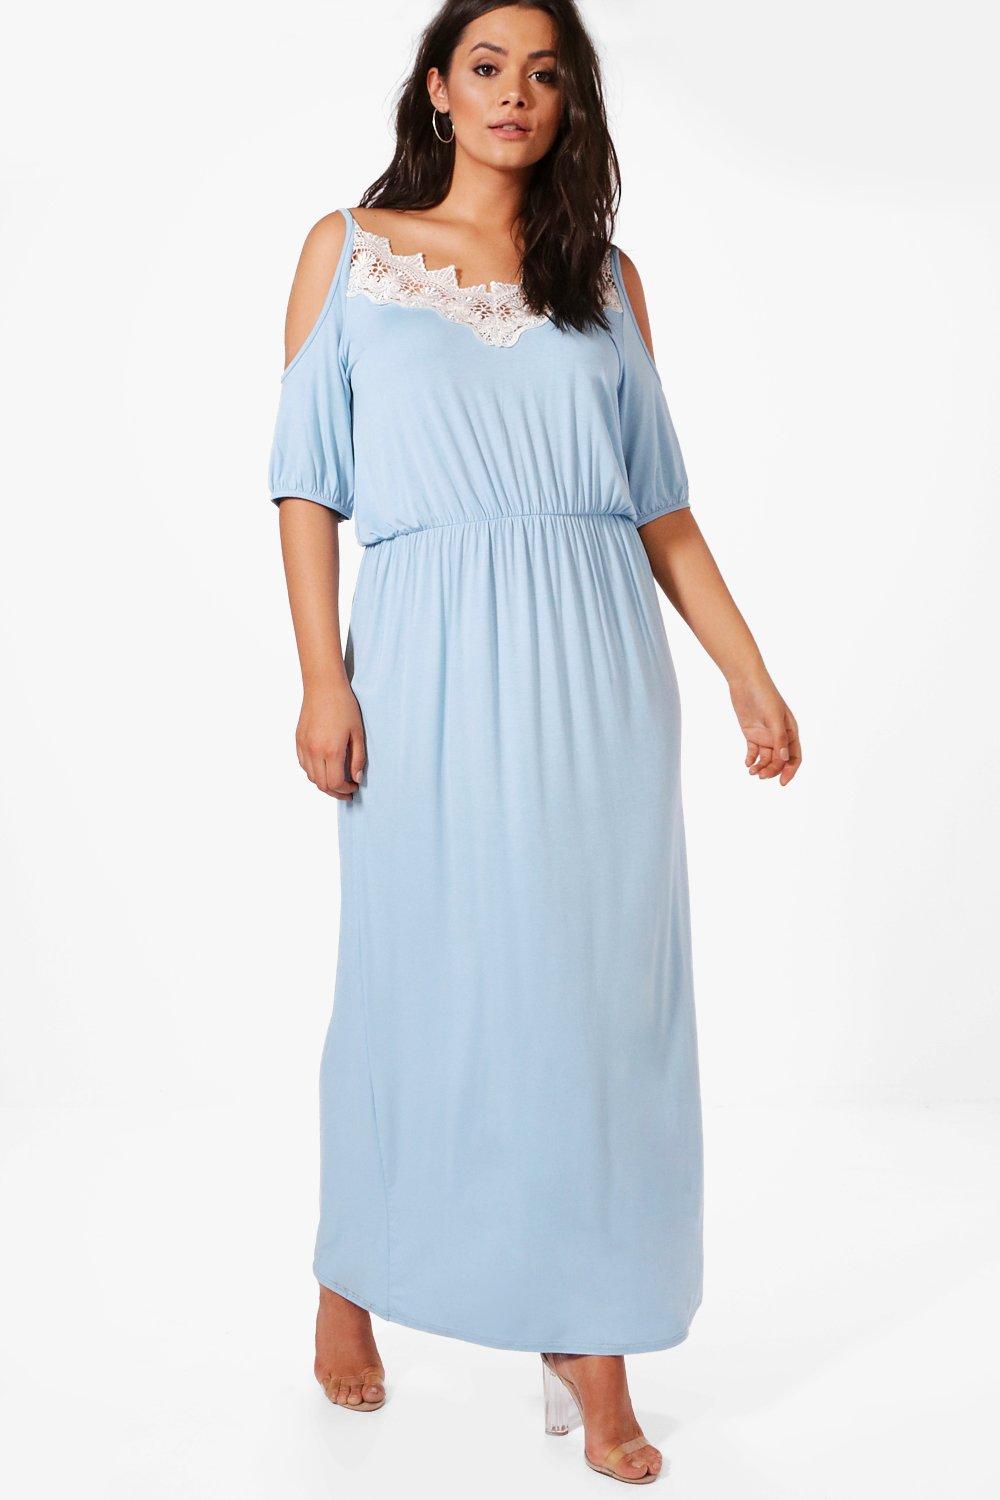 Boohoo Womens Plus Size Faith Lace Cold Shoulder Maxi Dress | eBay